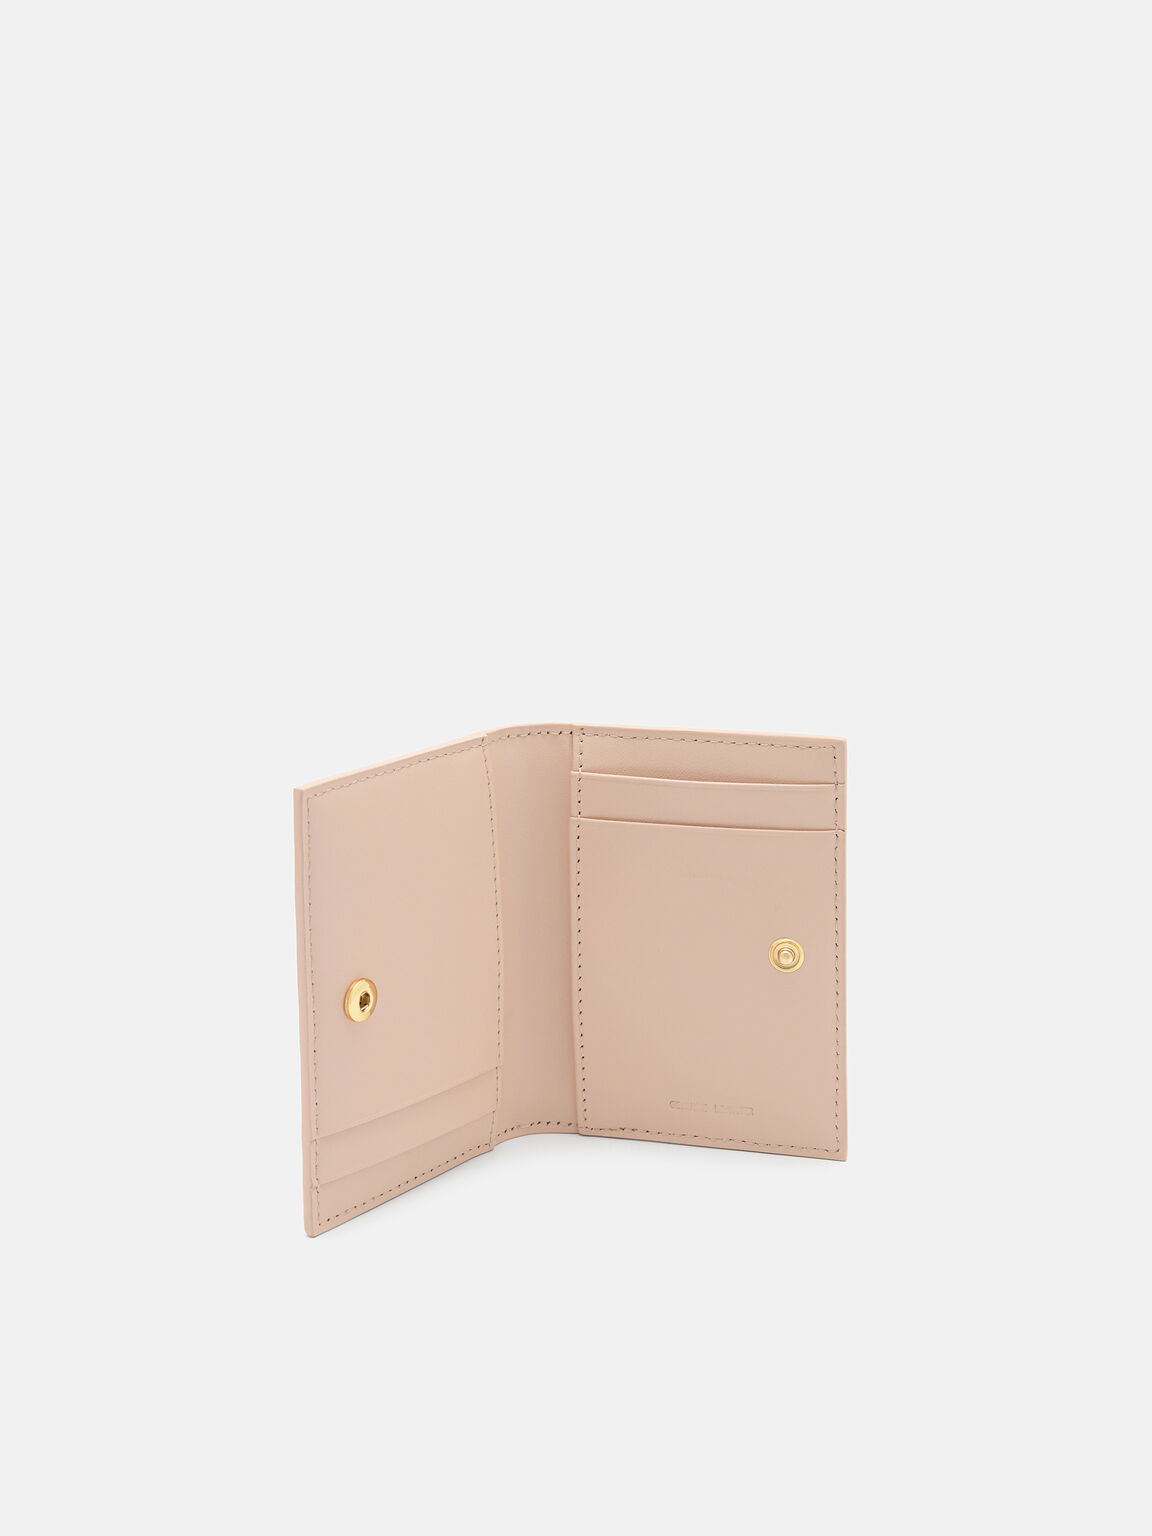 PEDRO Studio Leather Bi-Fold Card Holder, Nude